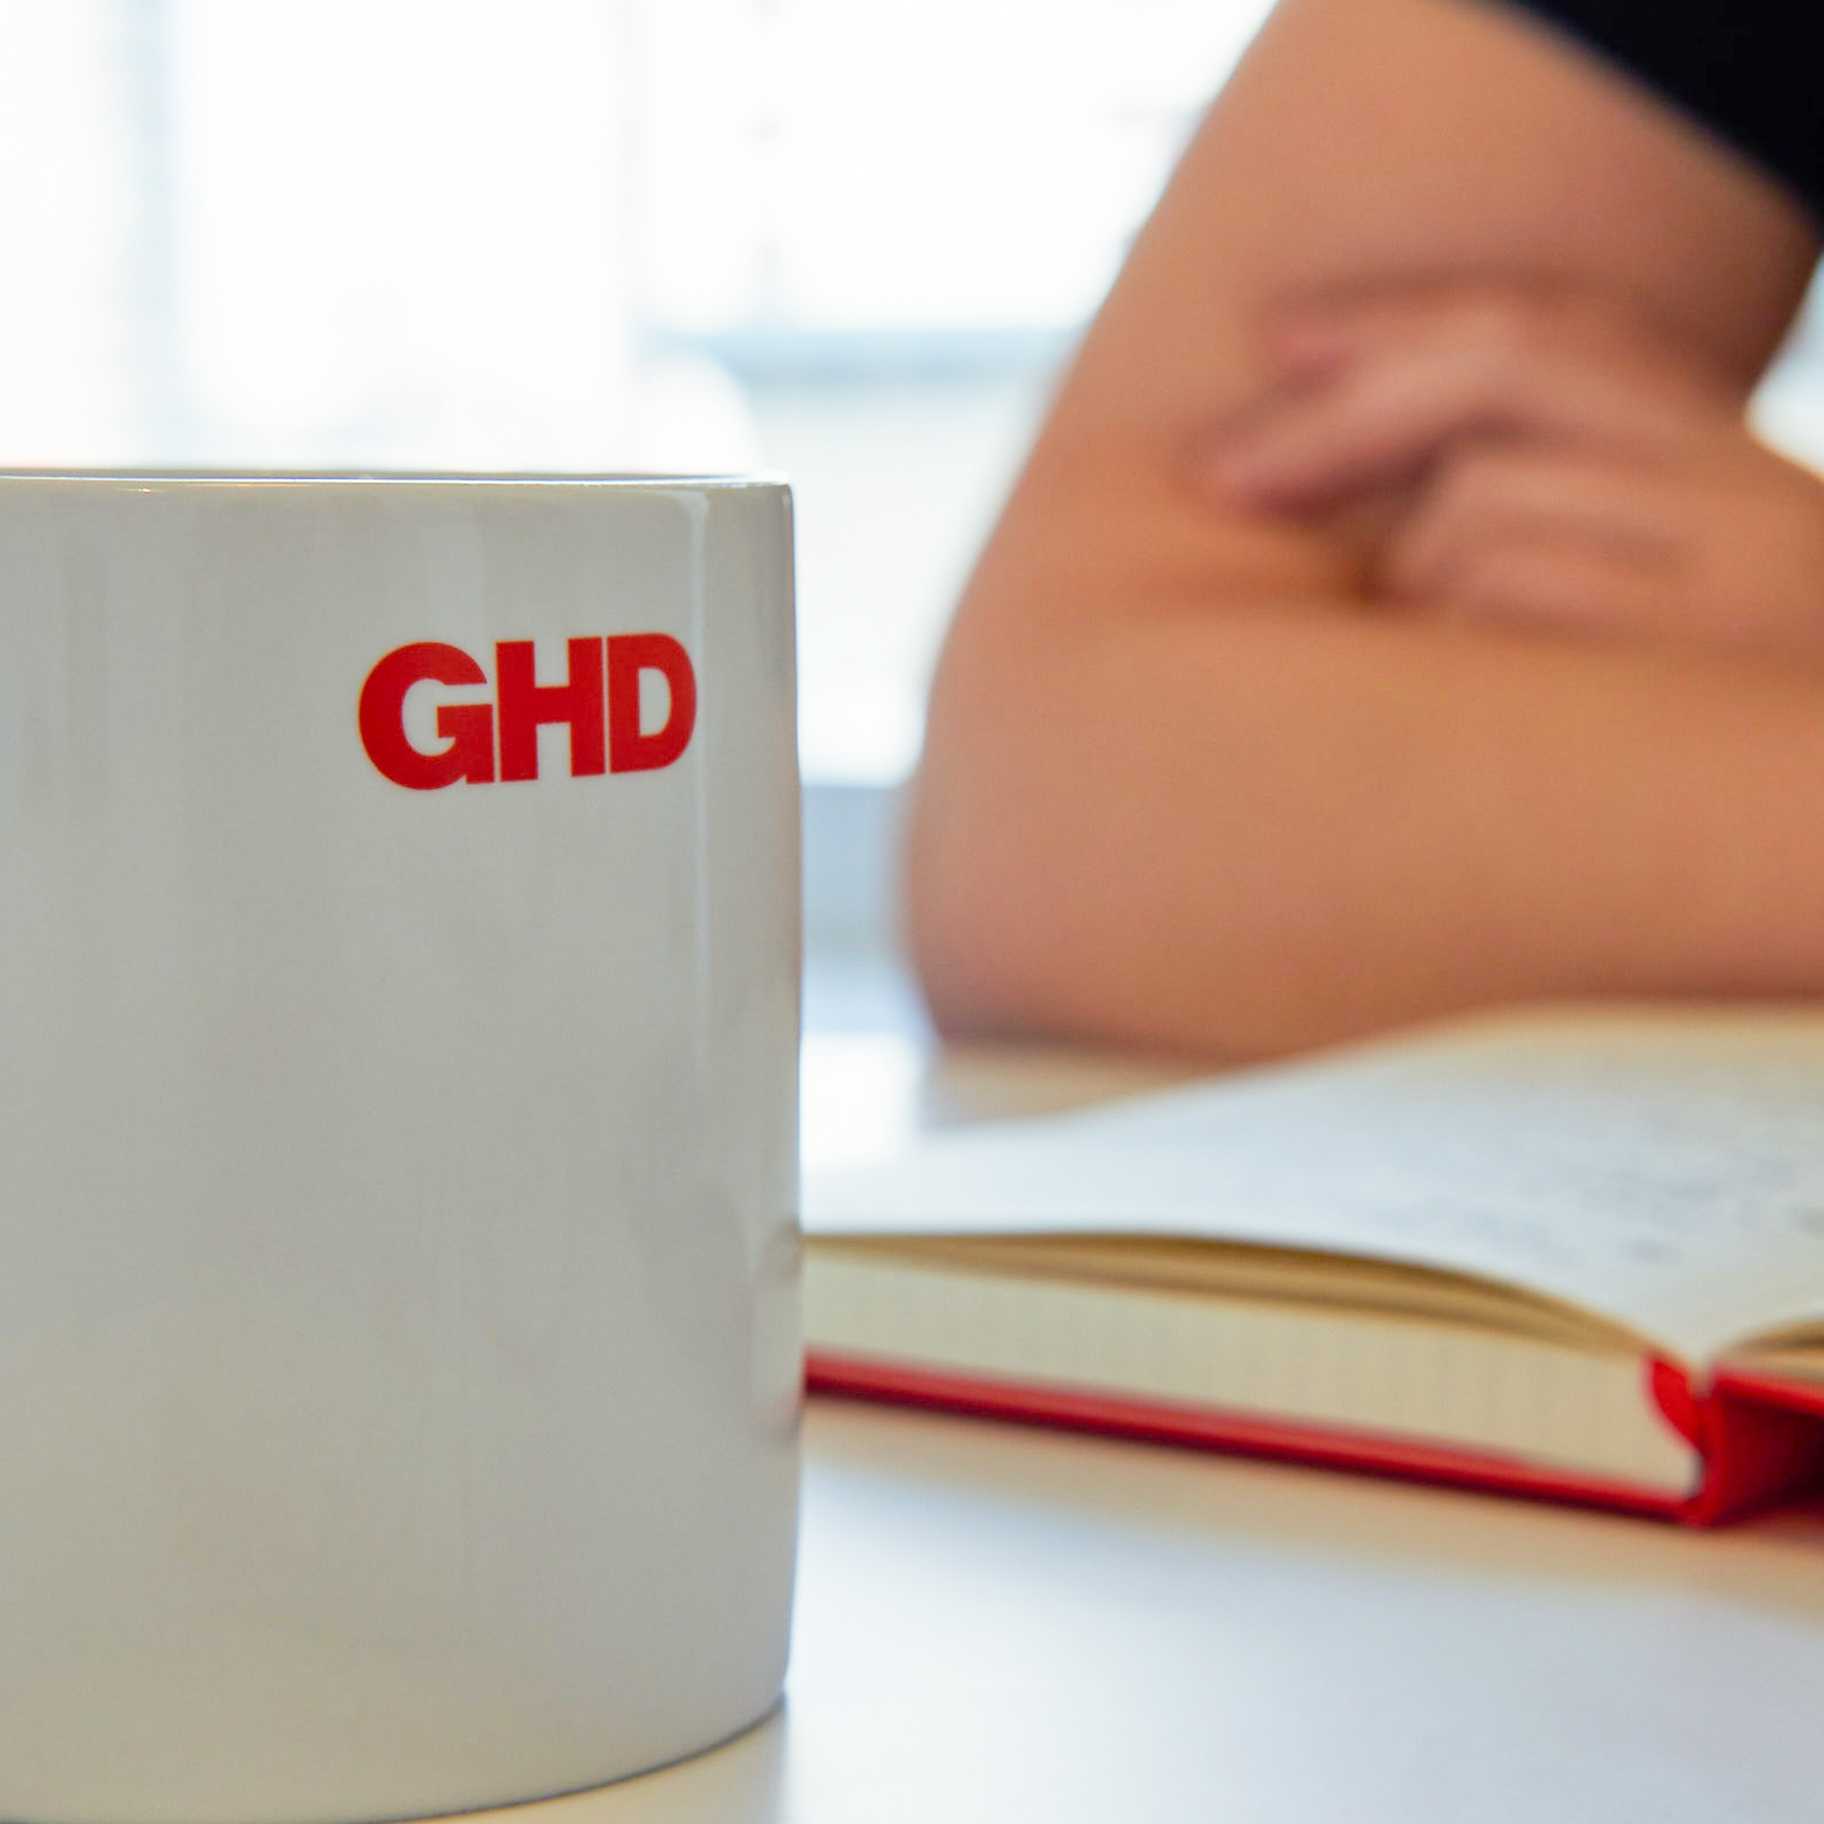 Close up of a GHD coffee mug